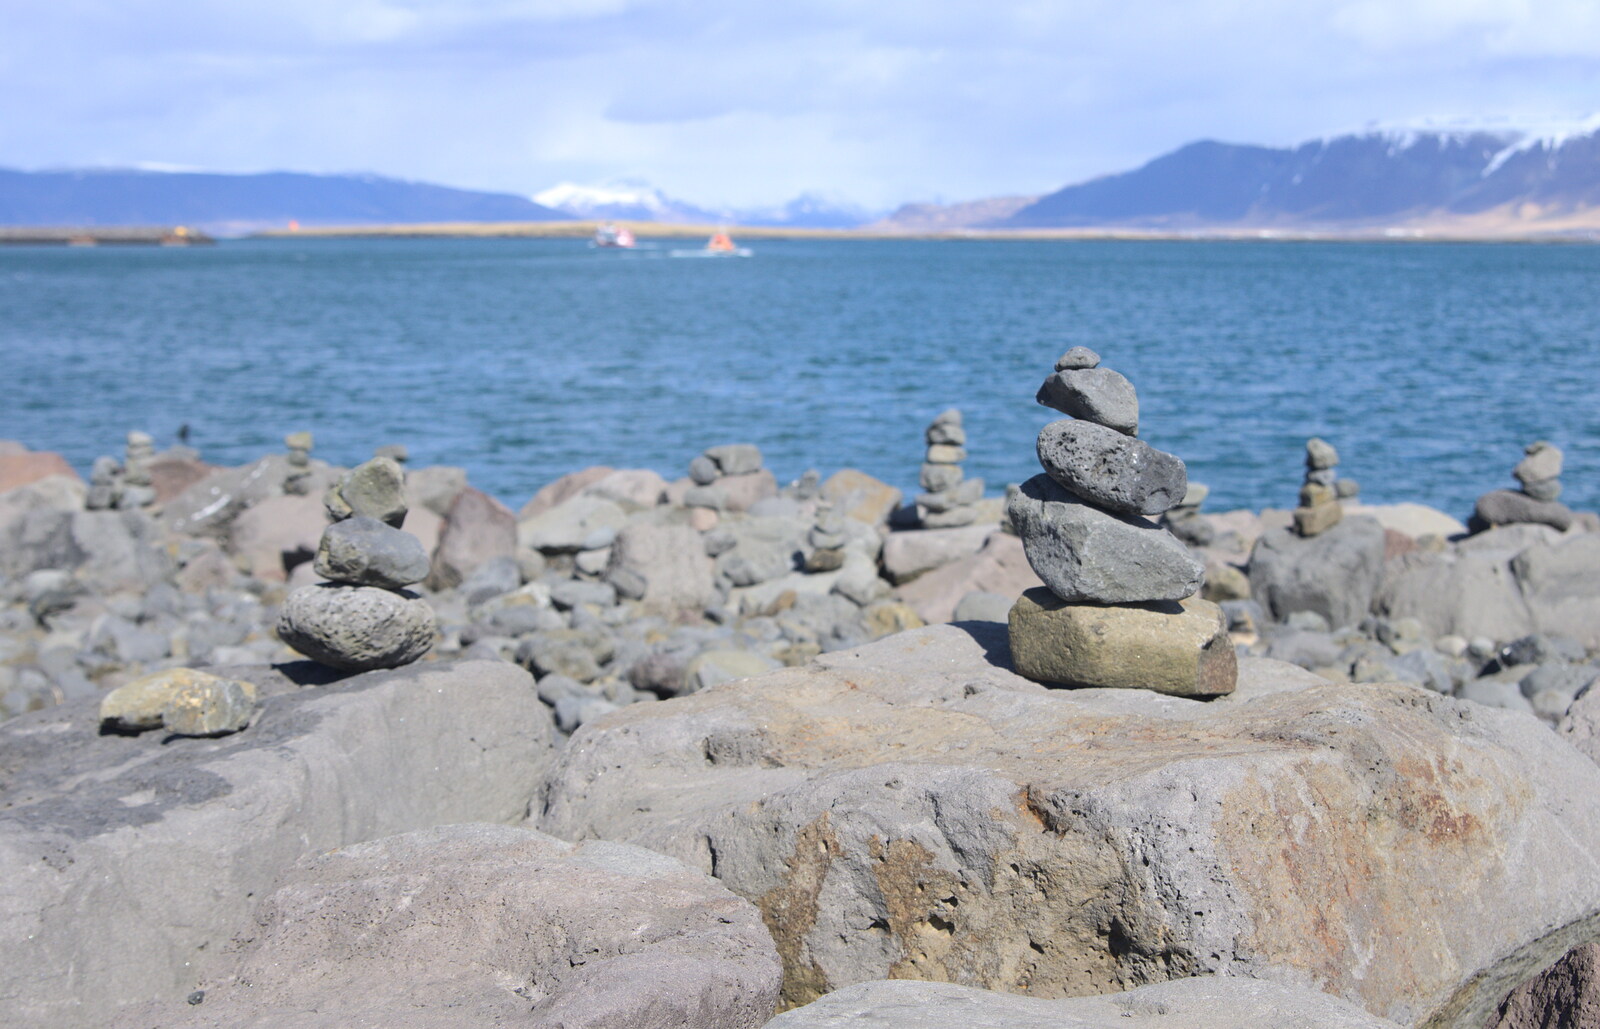 Rocky cairns near Harpa from Stríðsminjar War Relics, Perlan and Street Art, Reykjavik, Iceland - 23rd April 2017